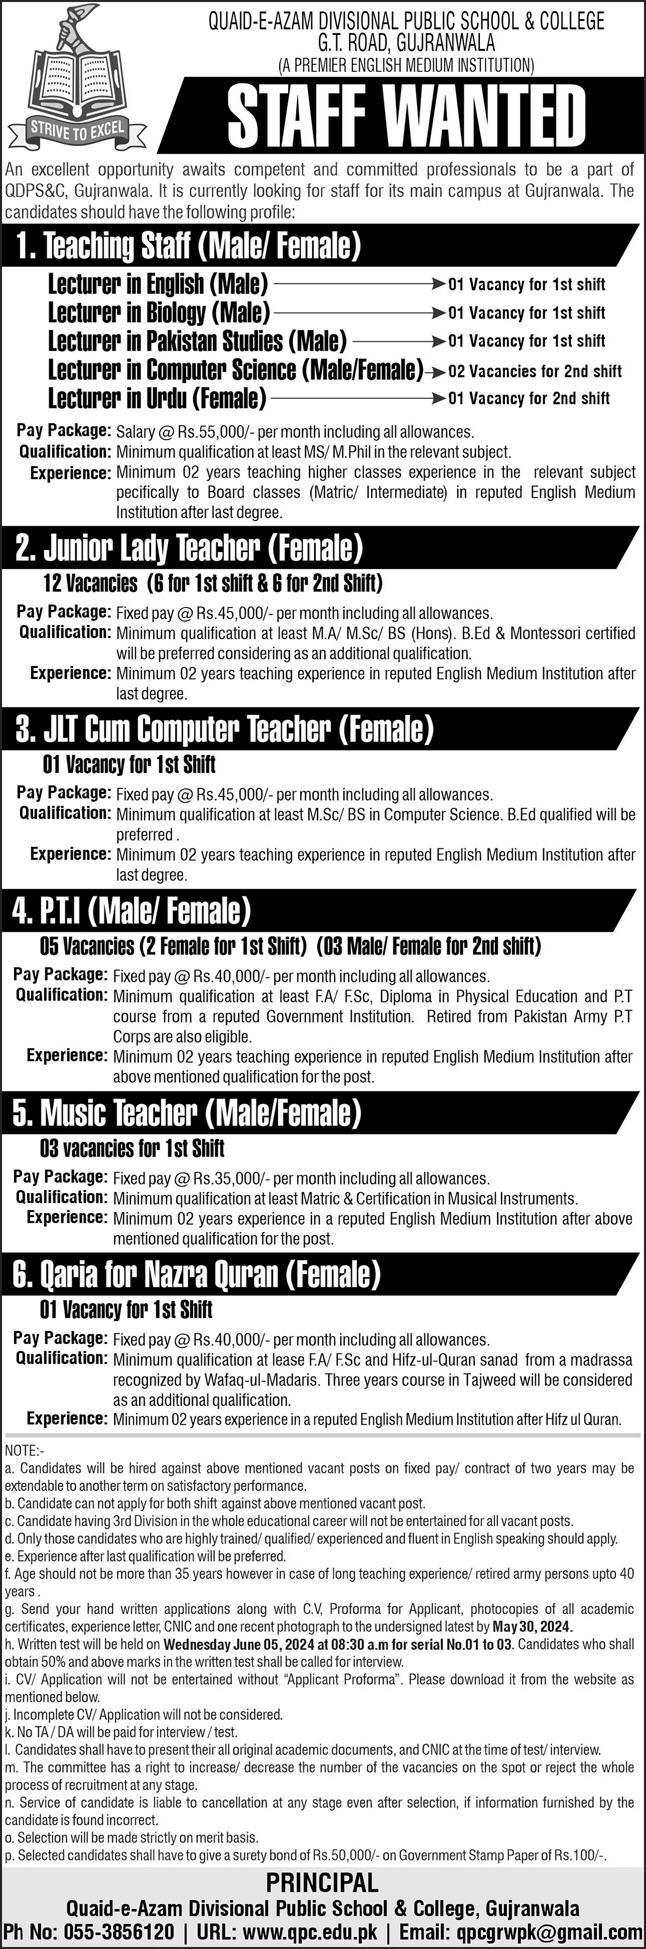 Quaid-e-Azam Divisional Public School & College (Male Female Teaching Faculty)